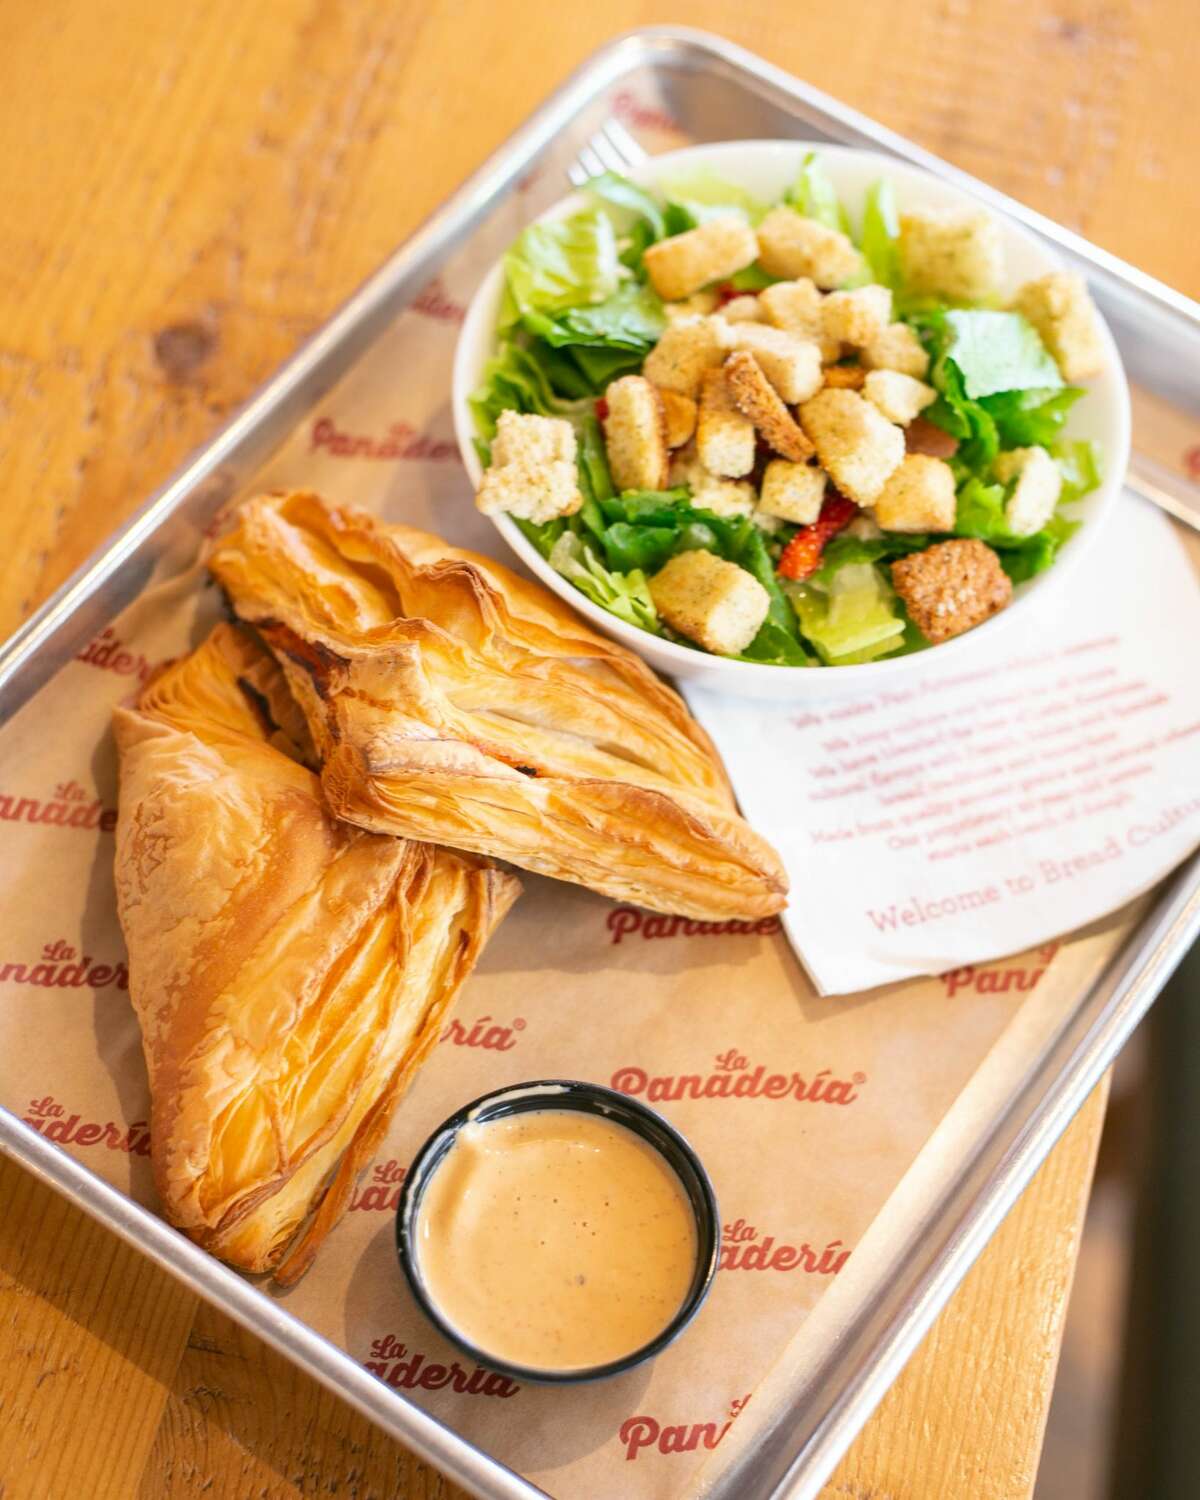 La Panaderia 2 tuna empanadas and a salad $10.50 301 E. Houston St. & 8305 Broadway St.